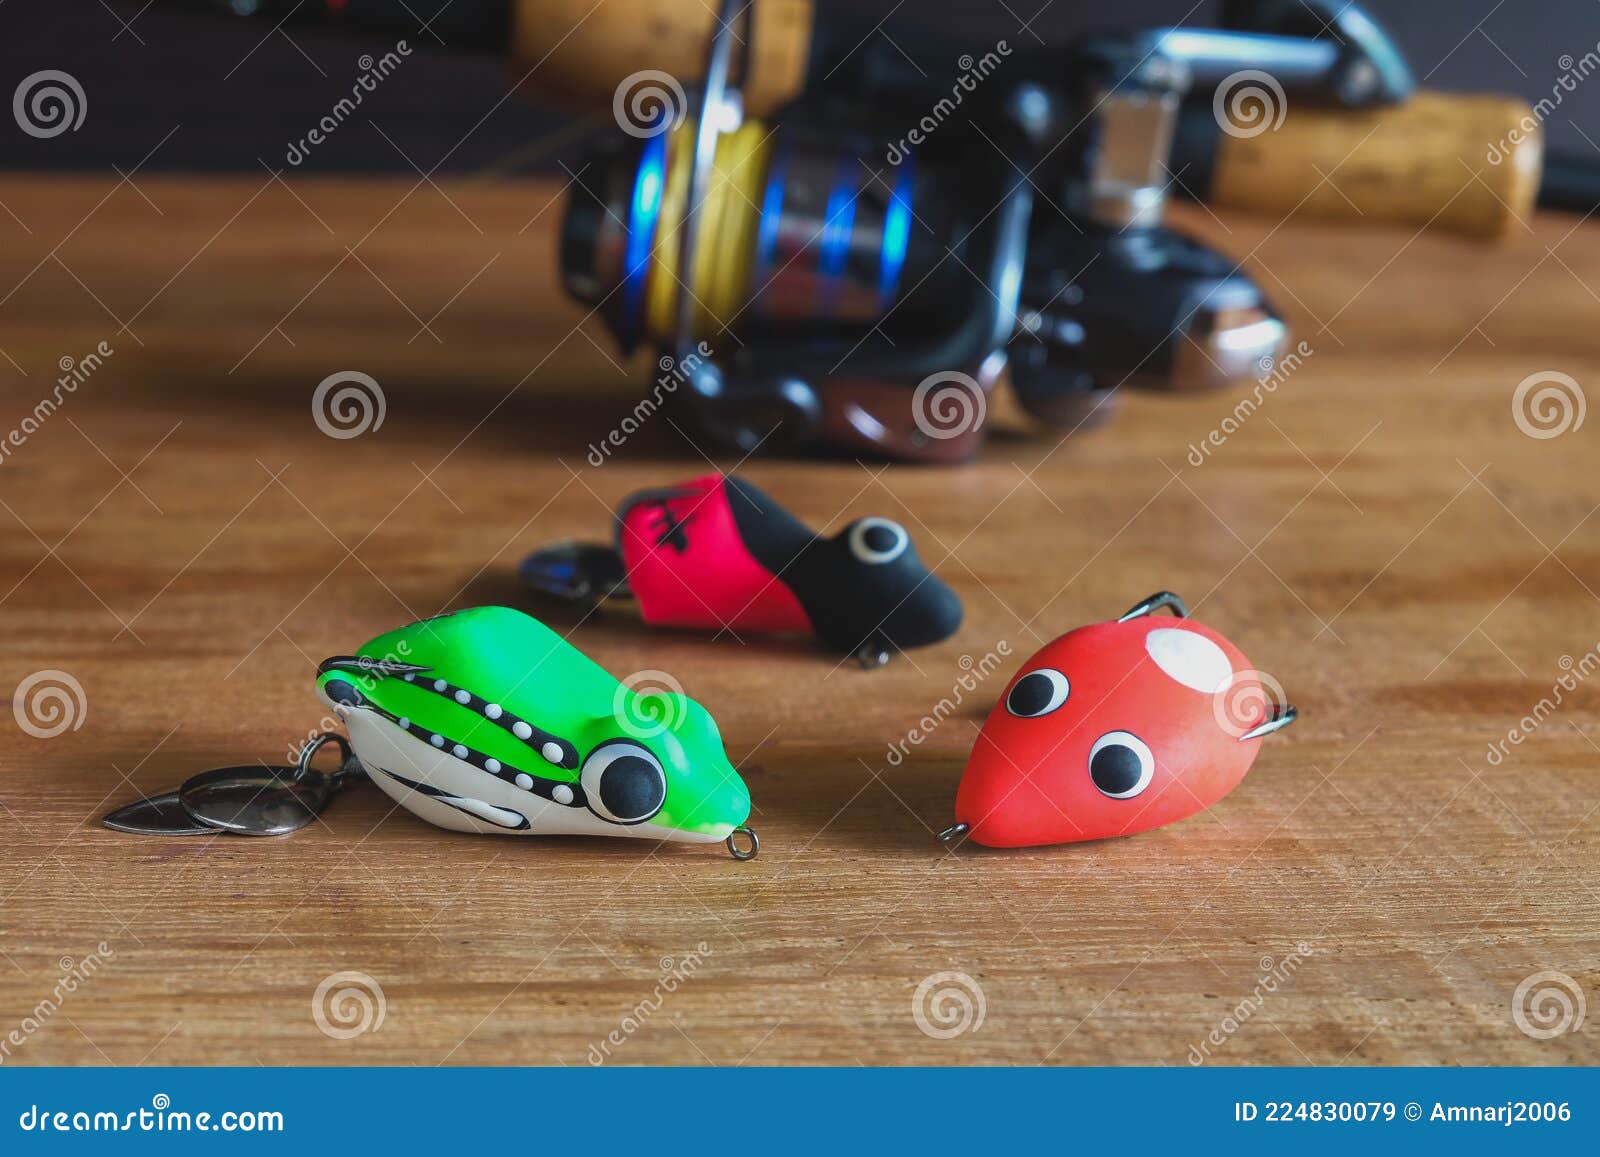 https://thumbs.dreamstime.com/z/soft-plastic-frog-lure-fiishing-spinning-fishing-bait-wooden-background-224830079.jpg